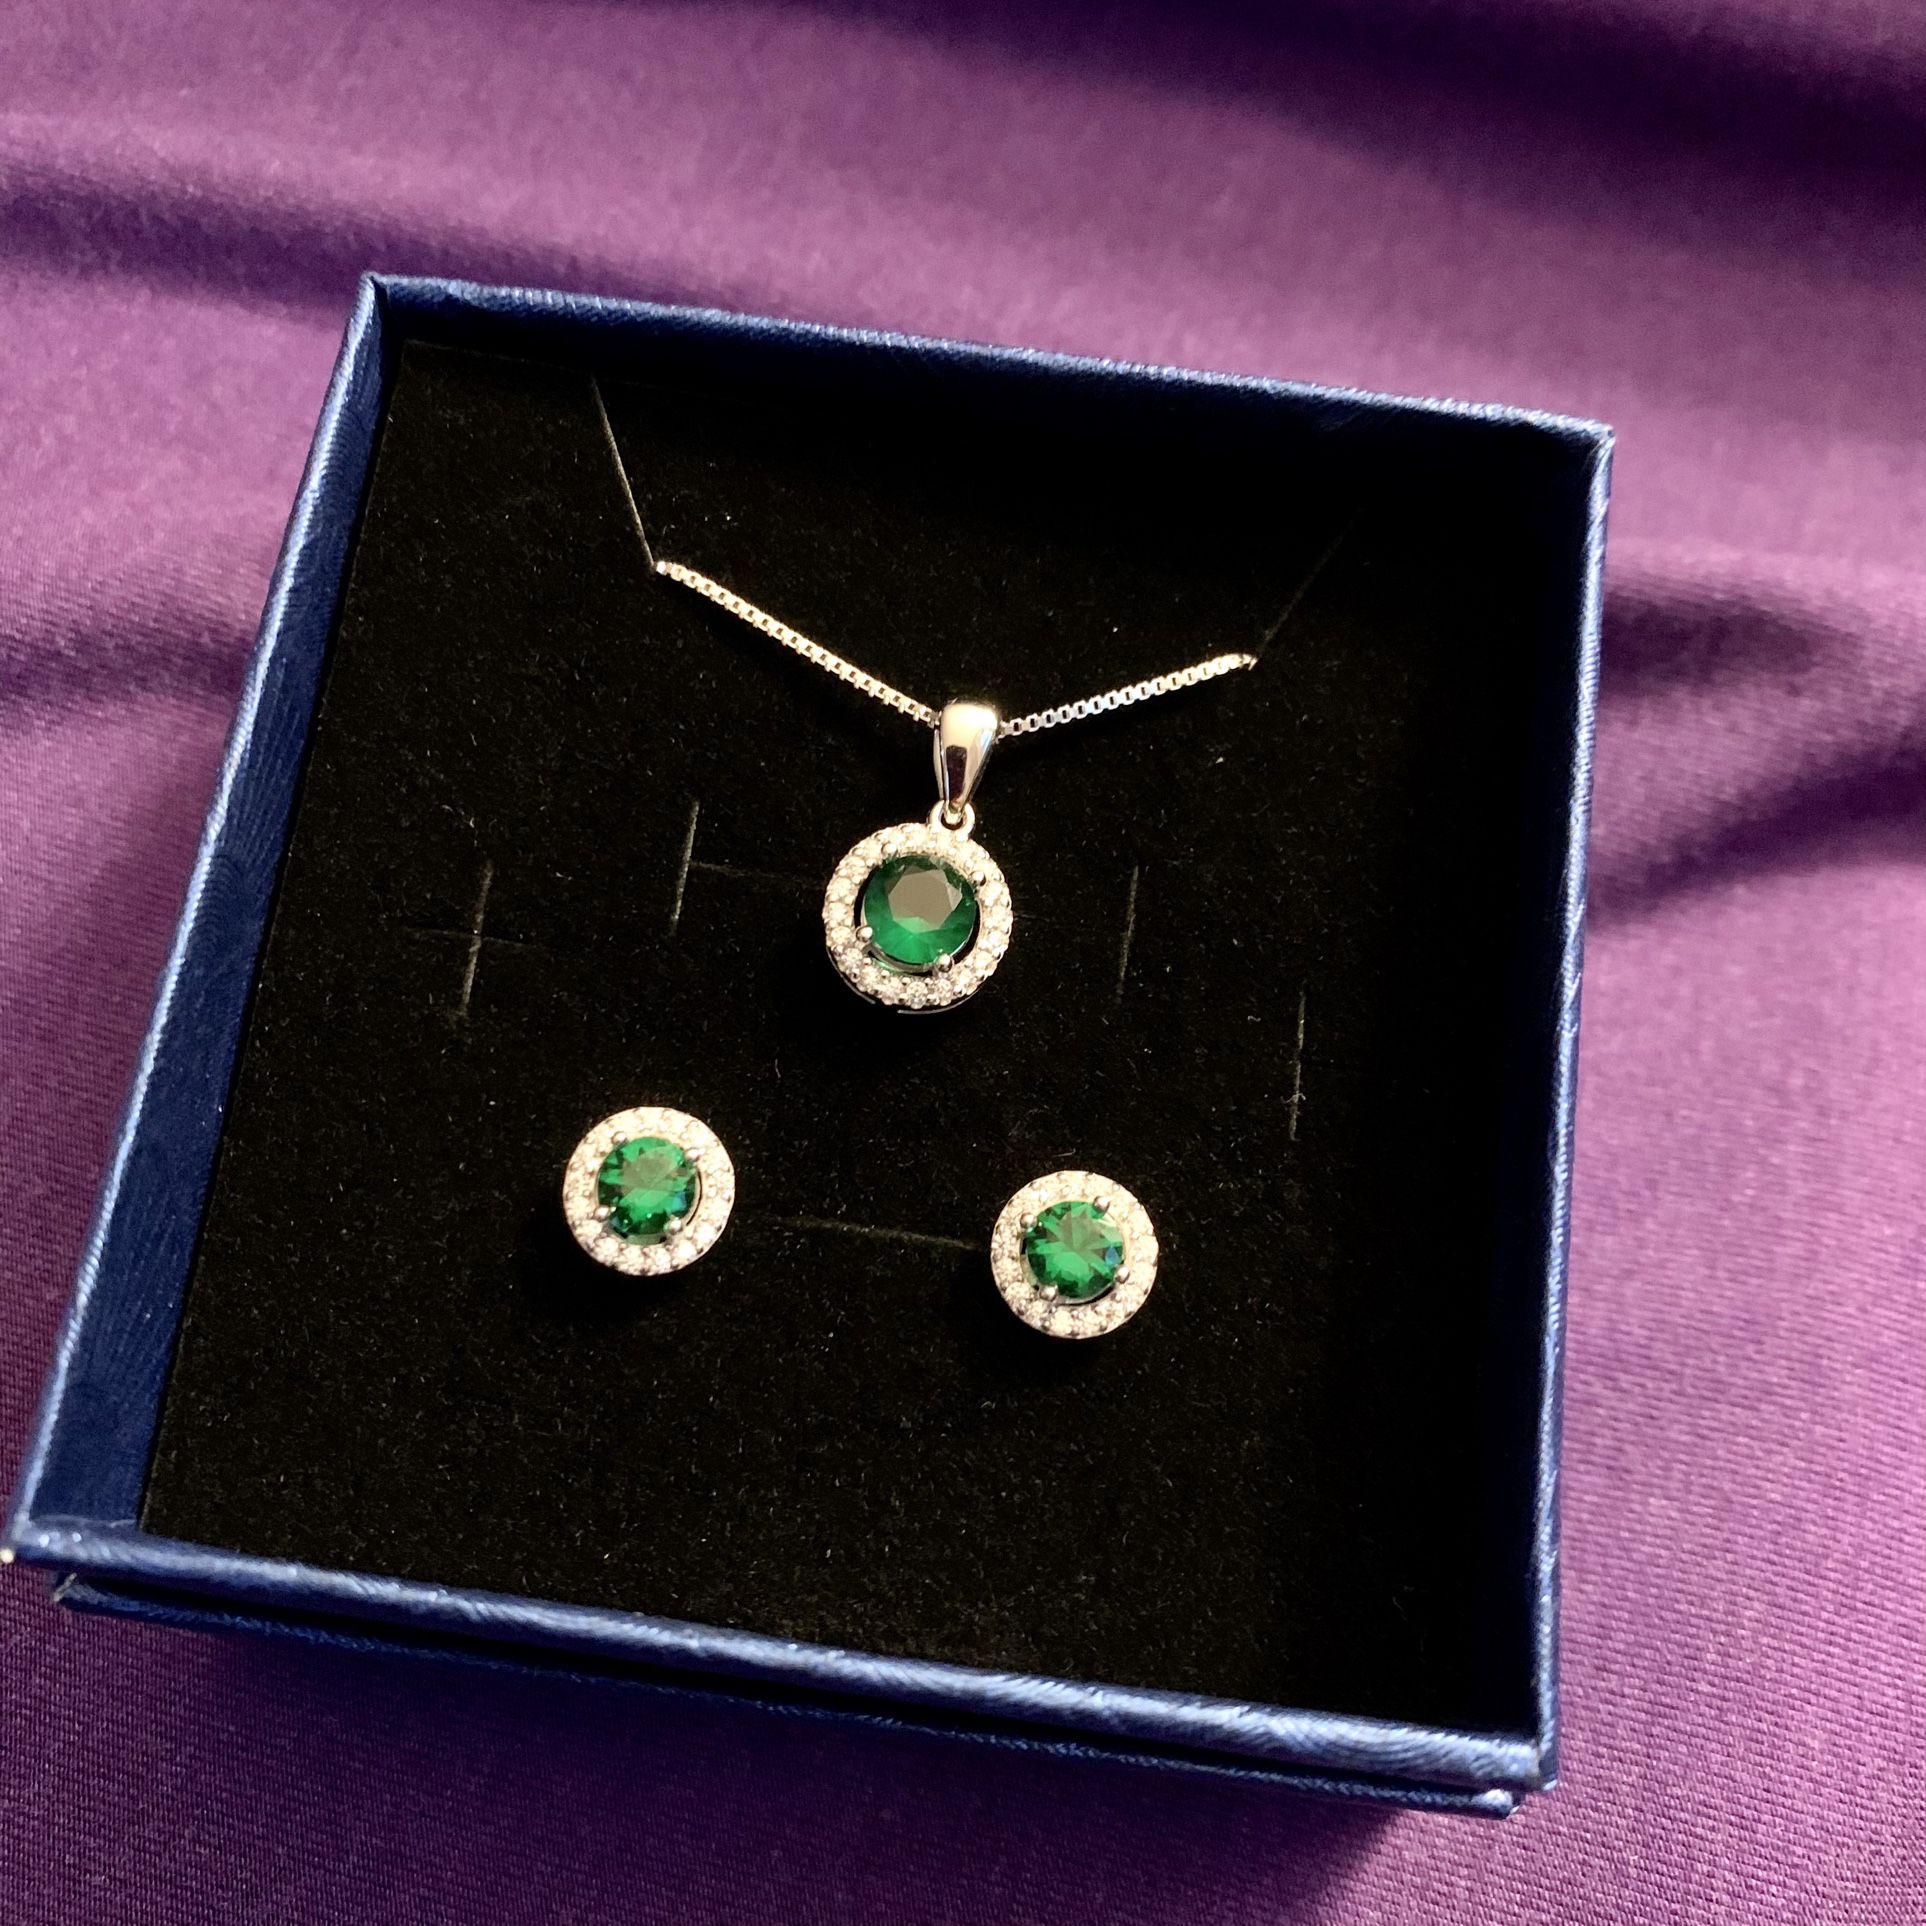 Halo emerald necklace & earrings set In Sterling Silver